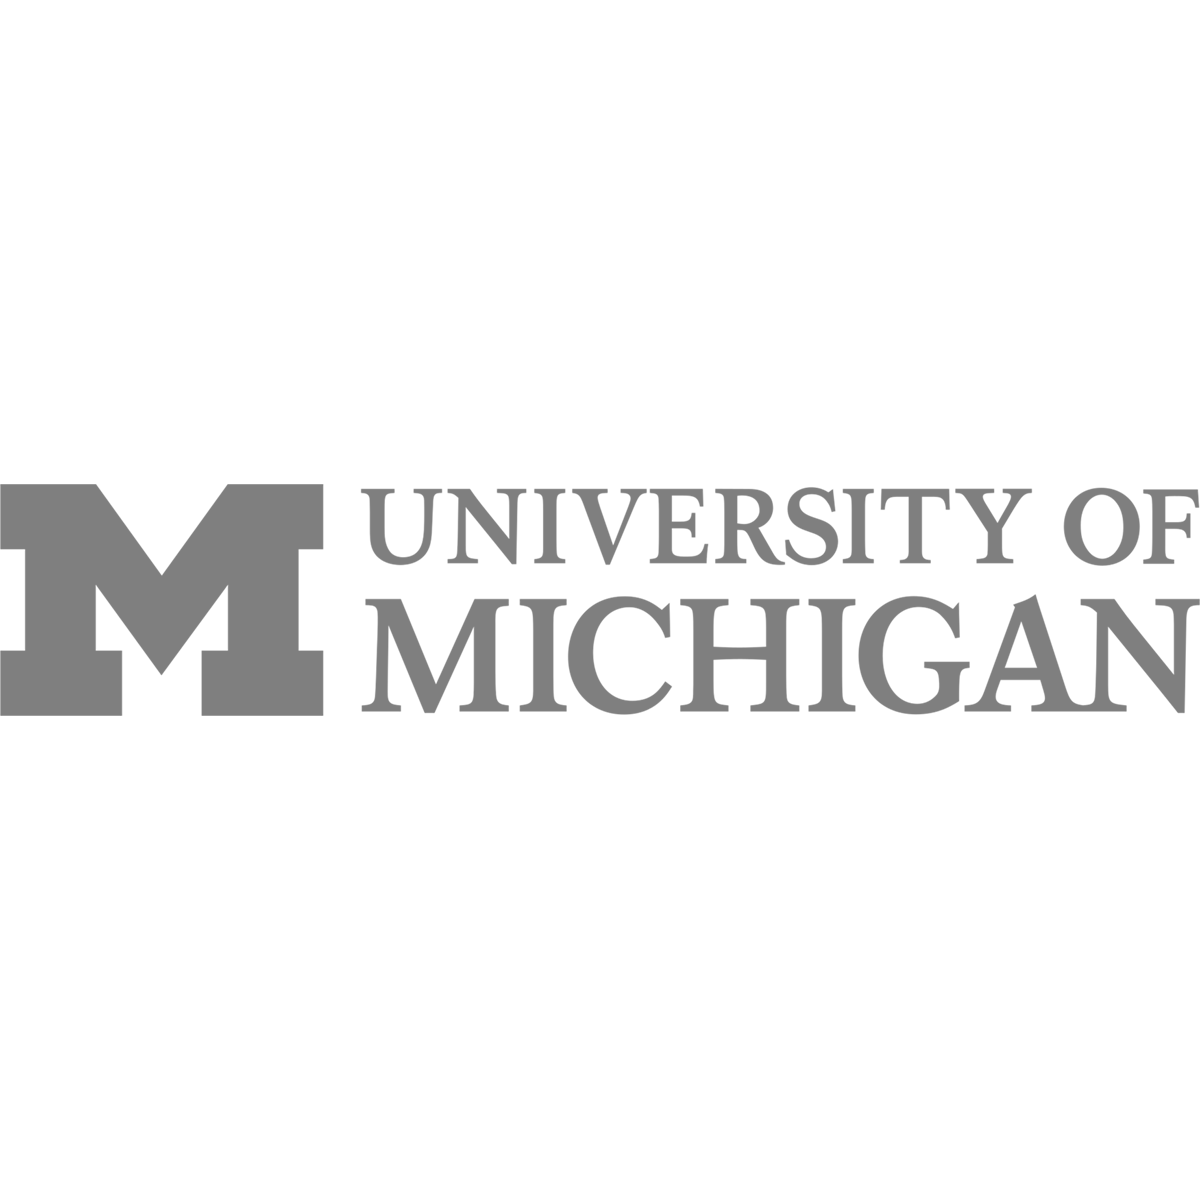 Client - University of Michigan Logo - Gray